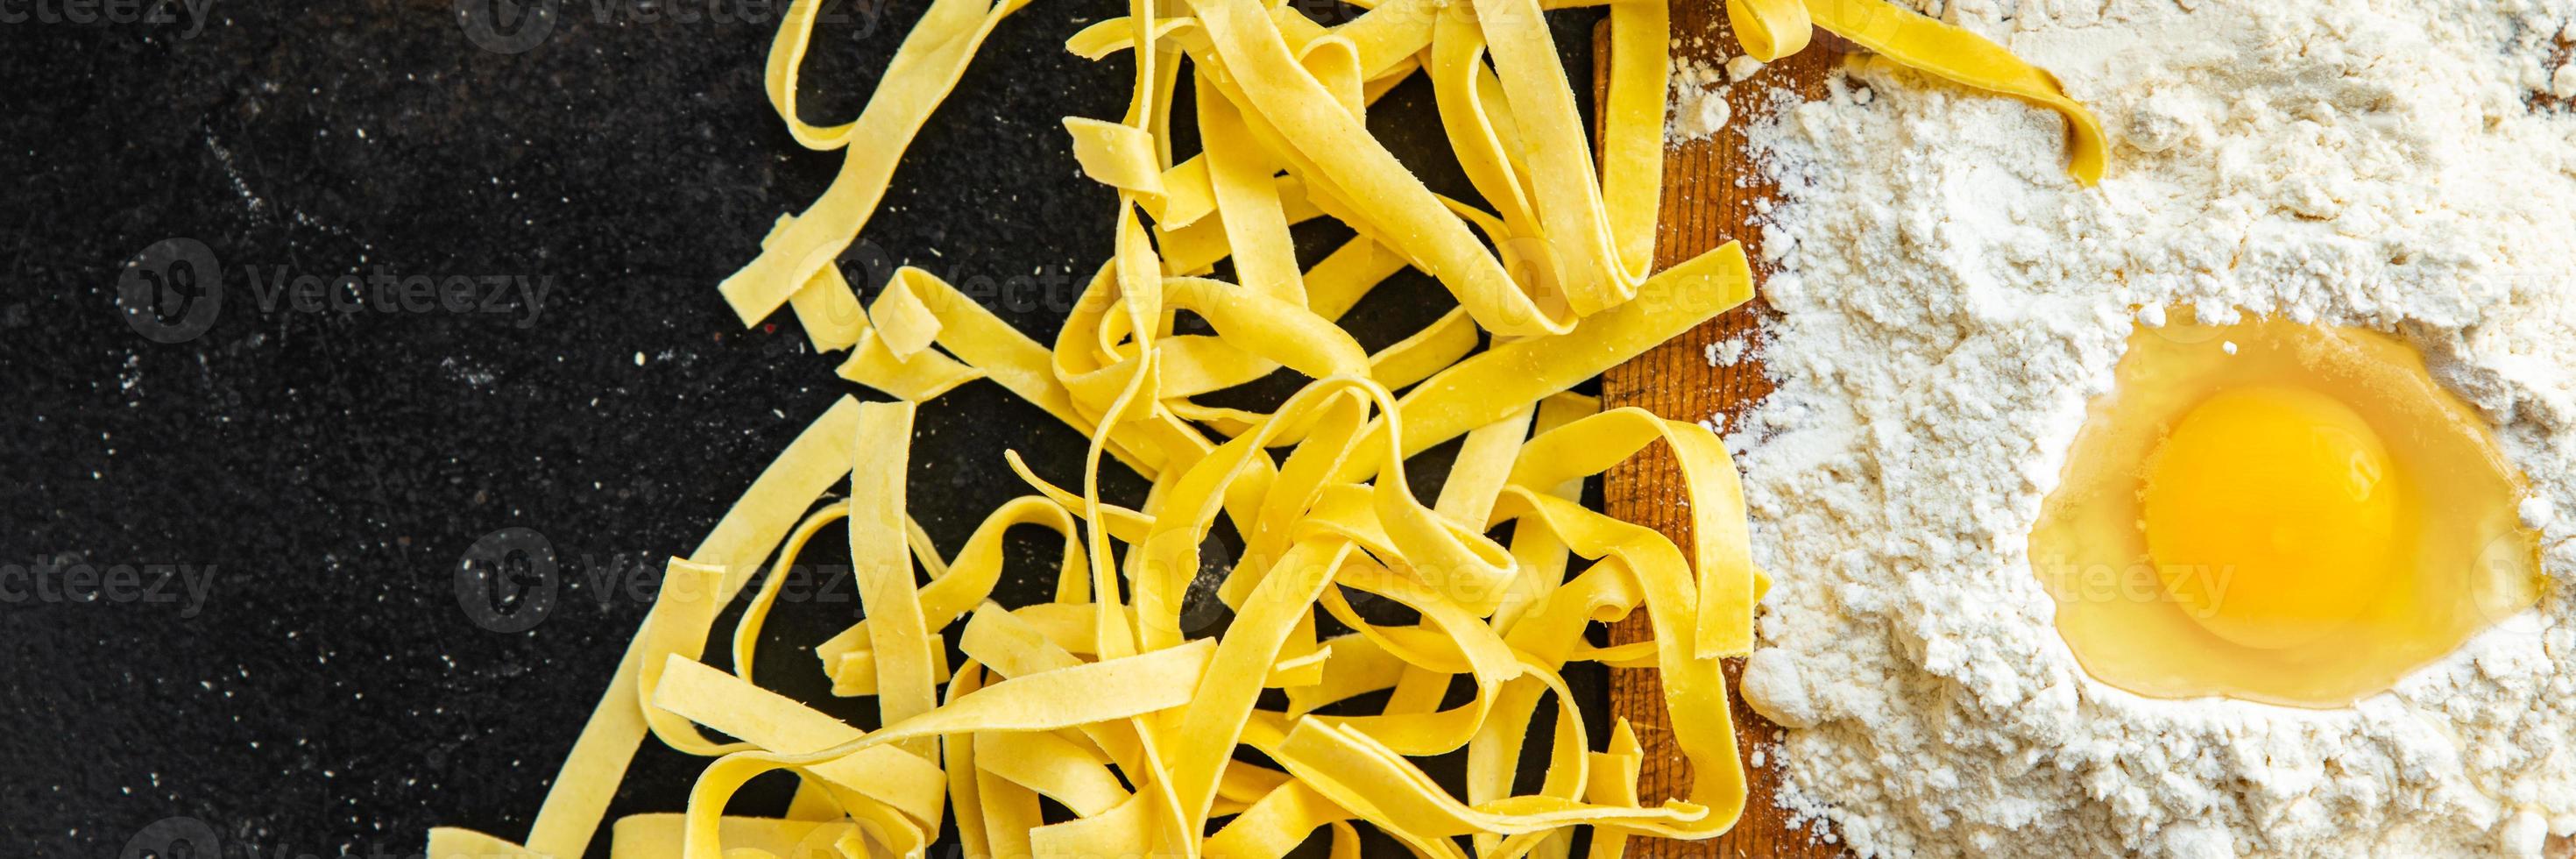 ägg pasta rå tagliatelle handgjord matlagning foto